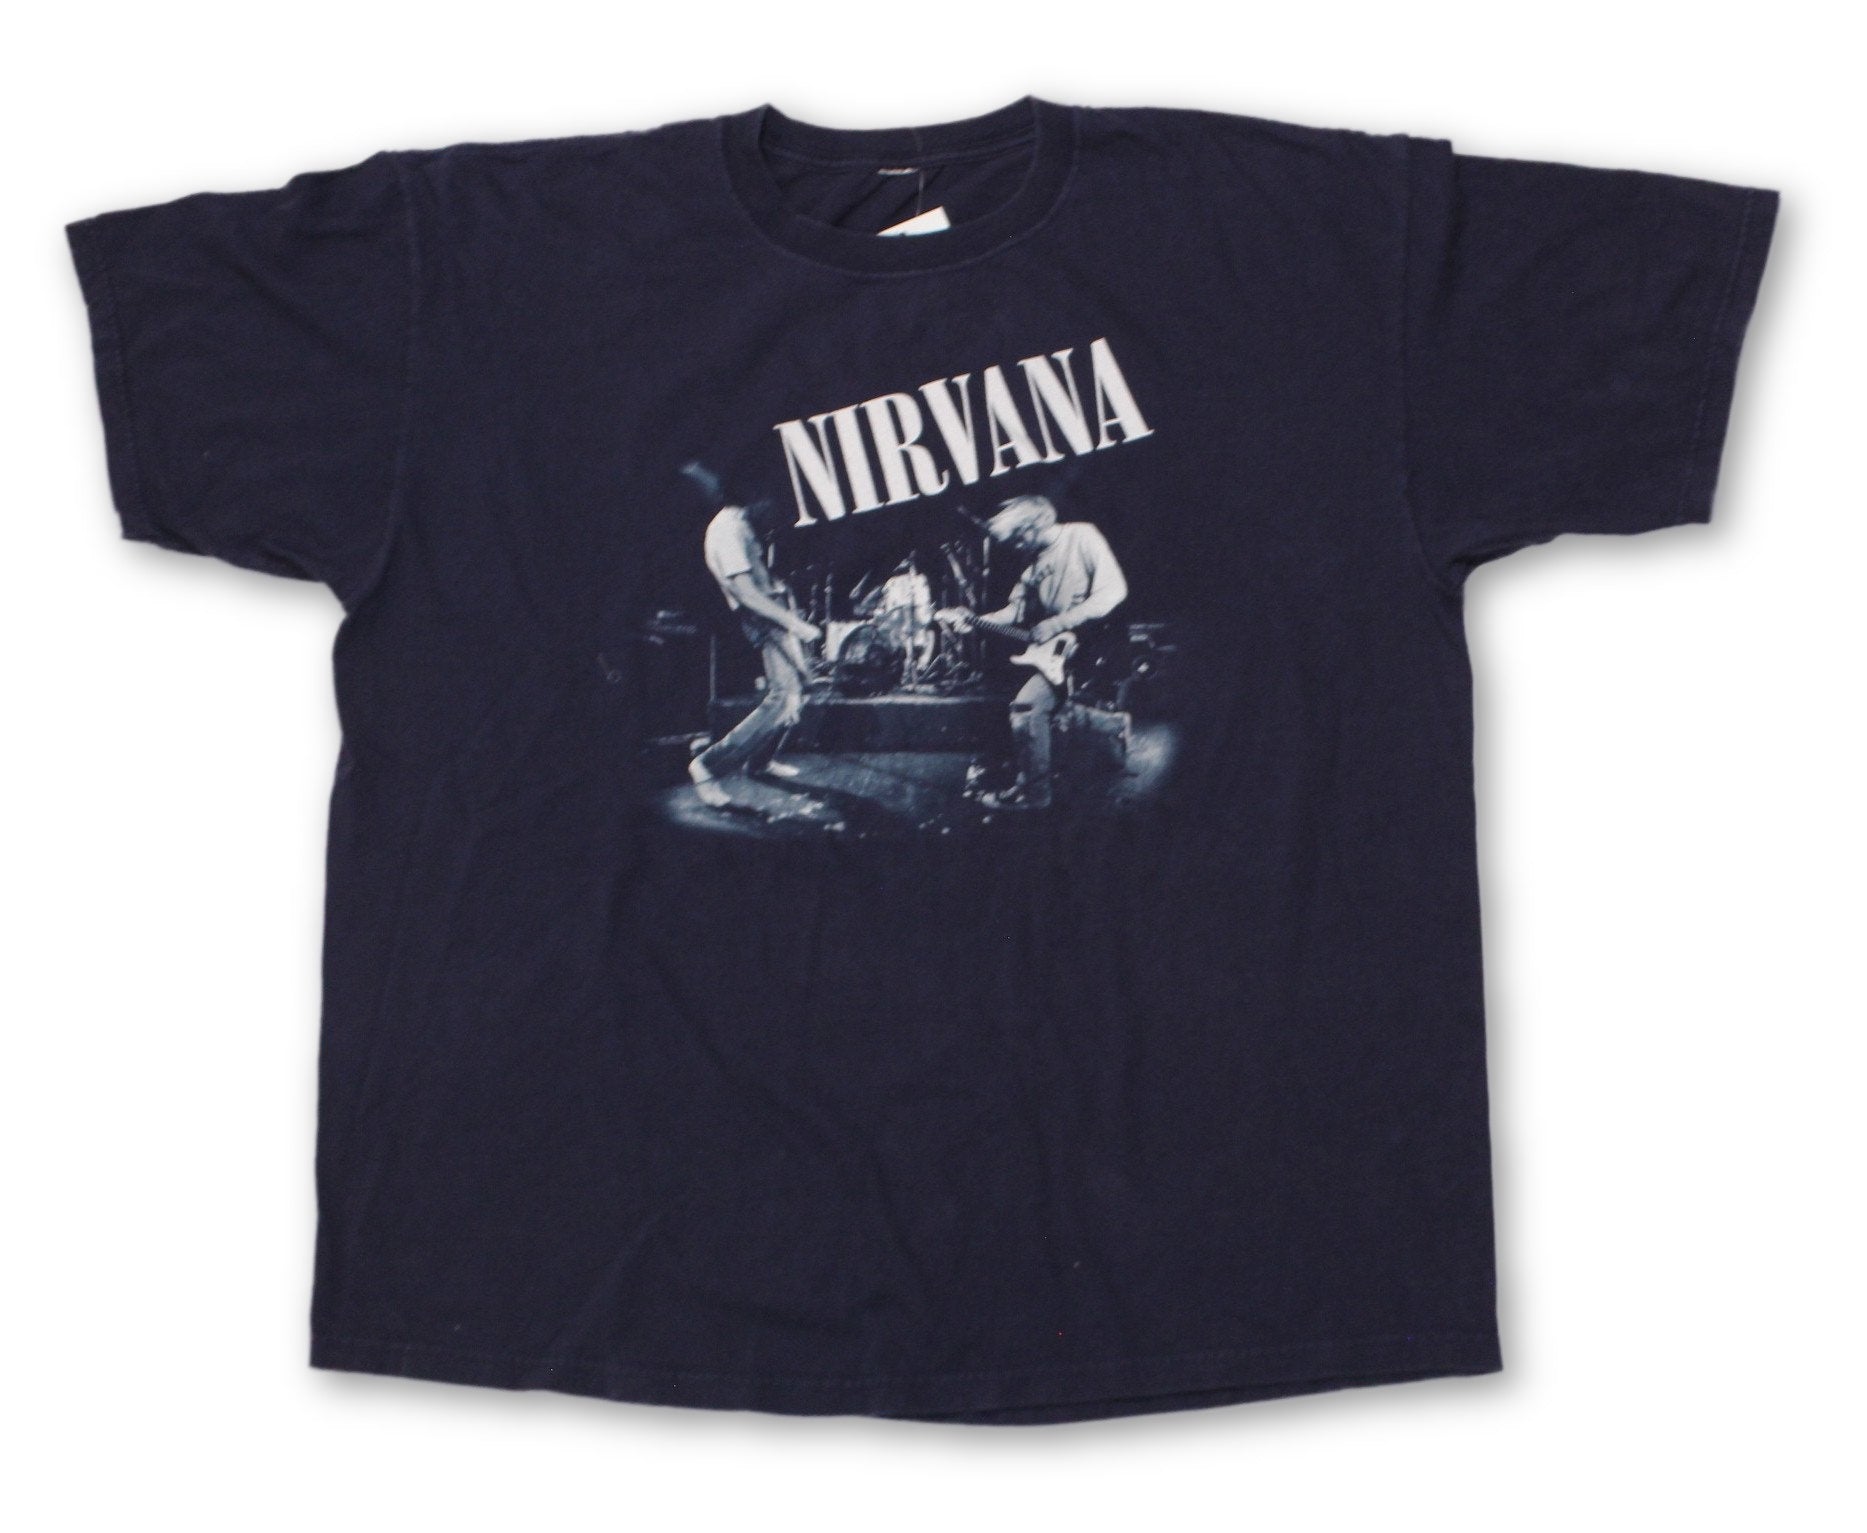 Vintage Nirvana "Live" T-Shrit - jointcustodydc